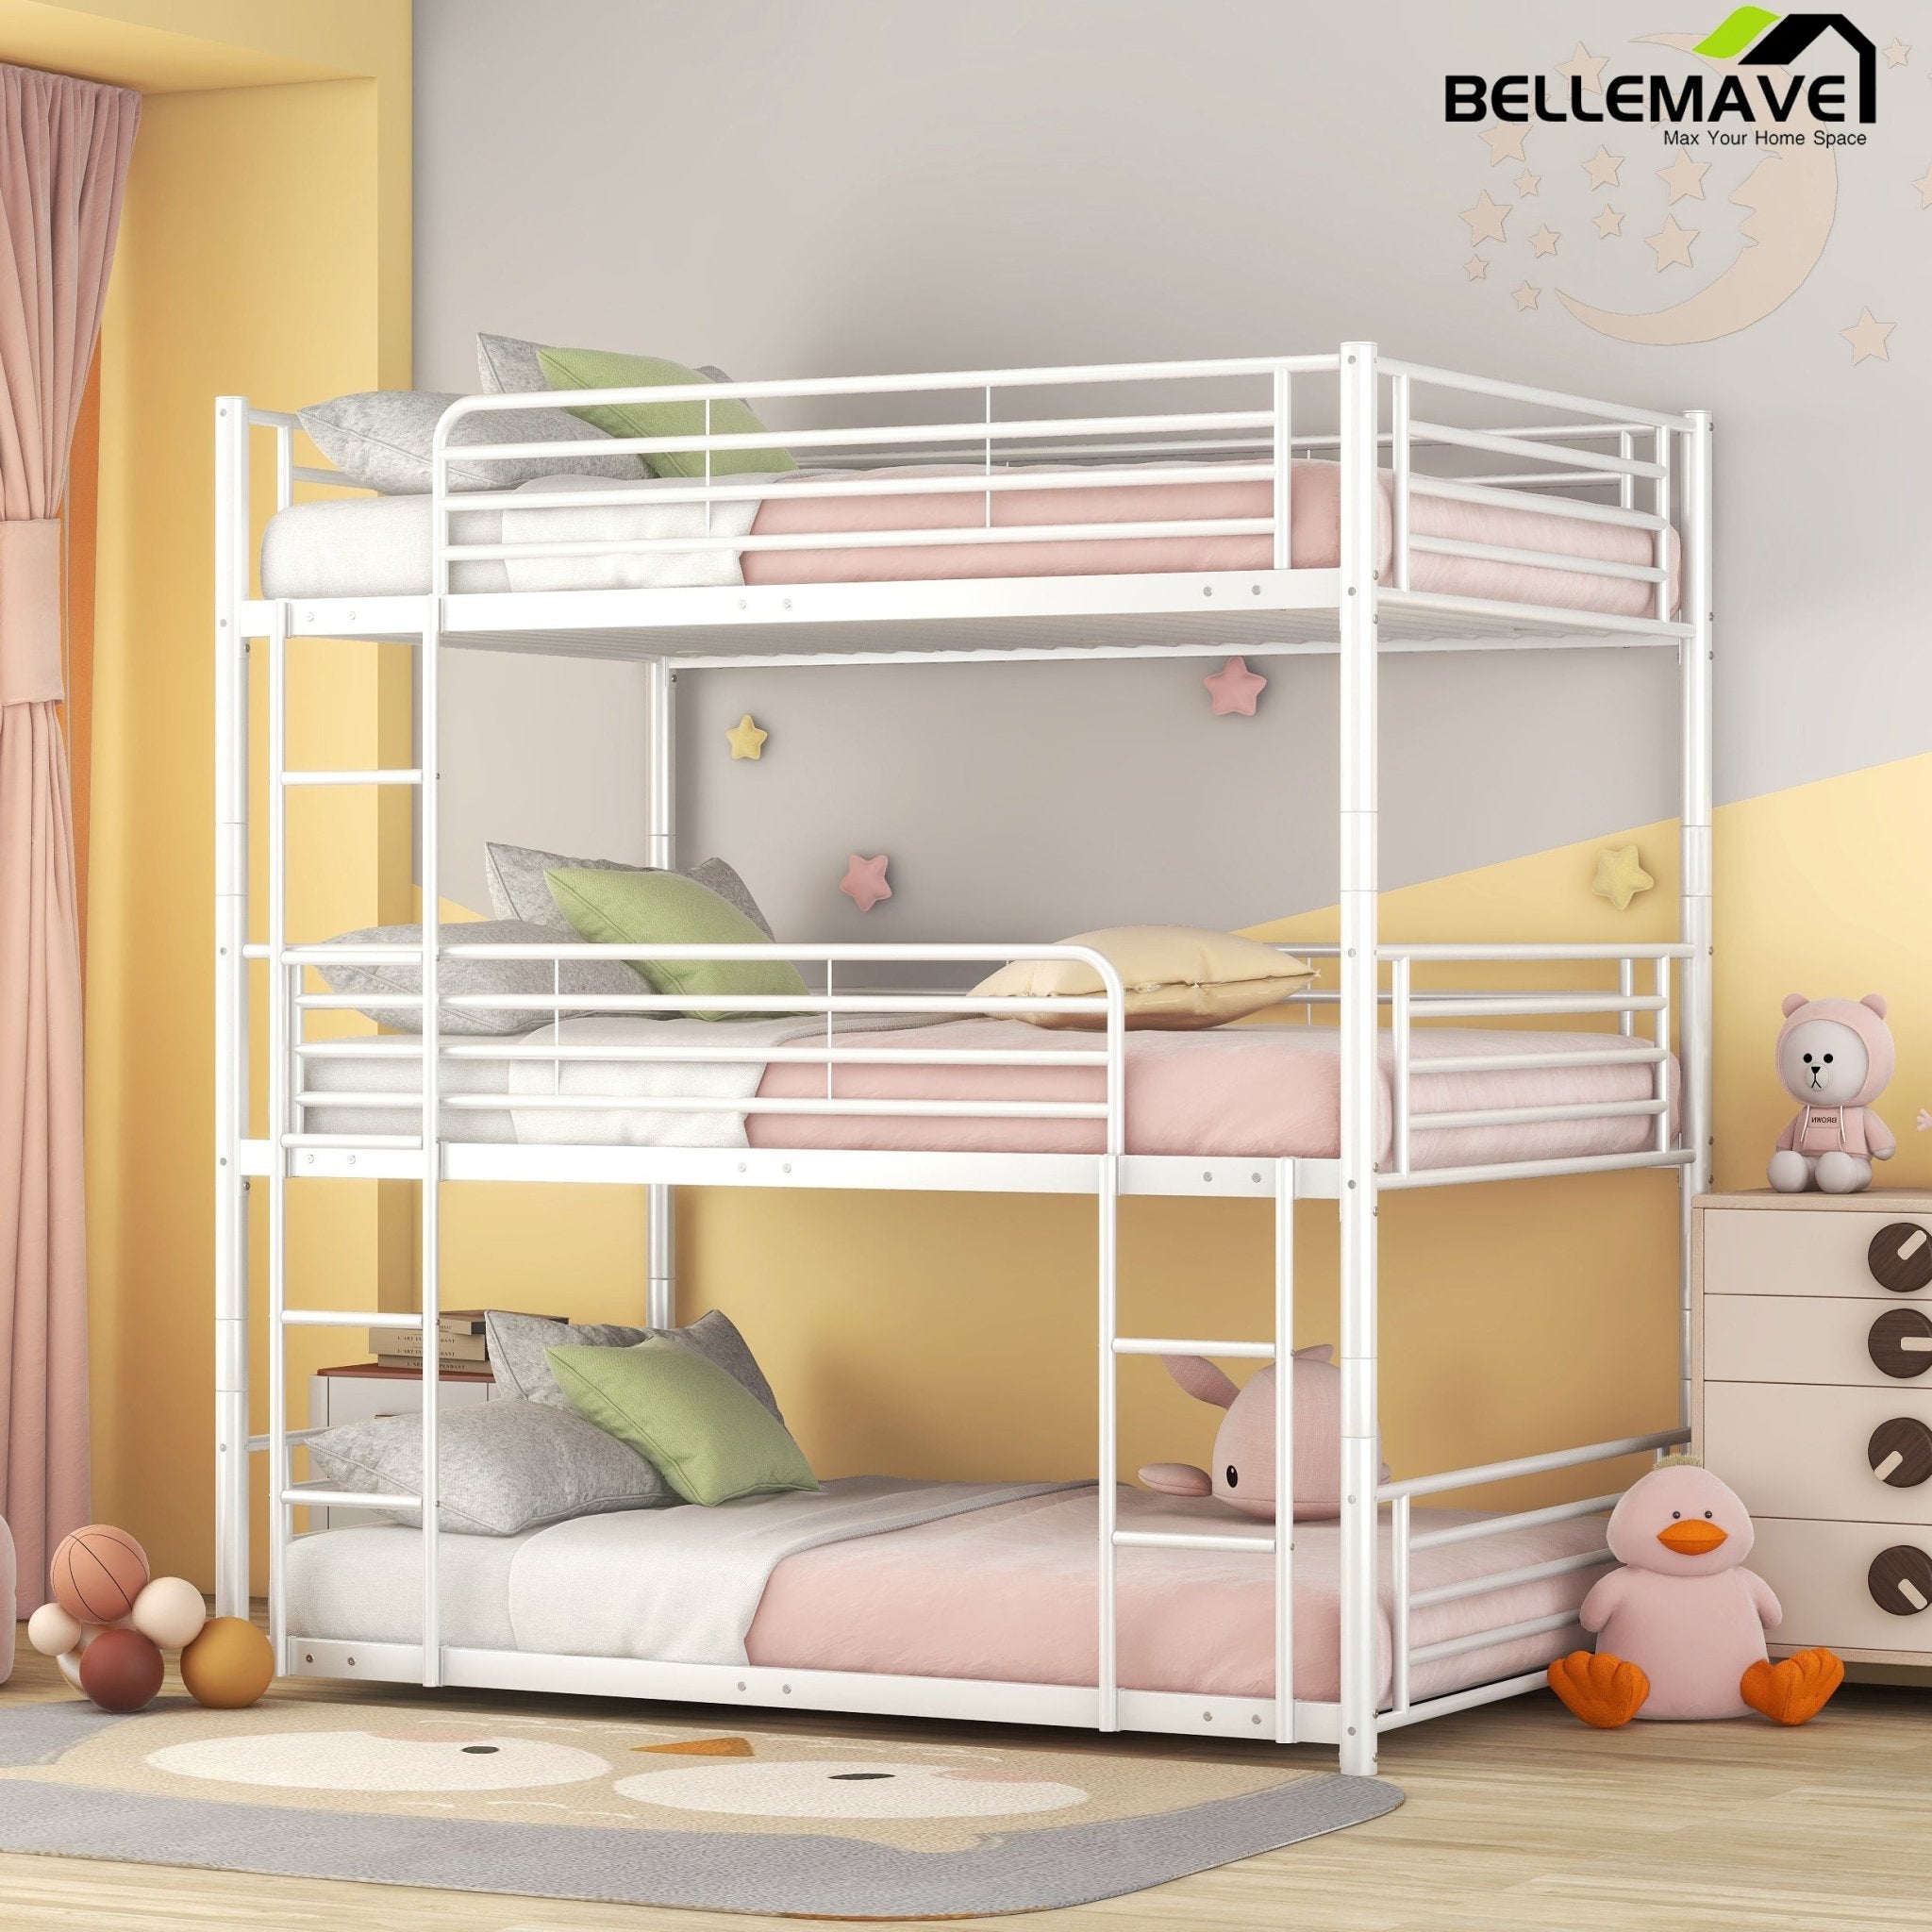 Bellemave Full-Full-Full Metal Triple Bed with Built-in Ladder - Bellemave